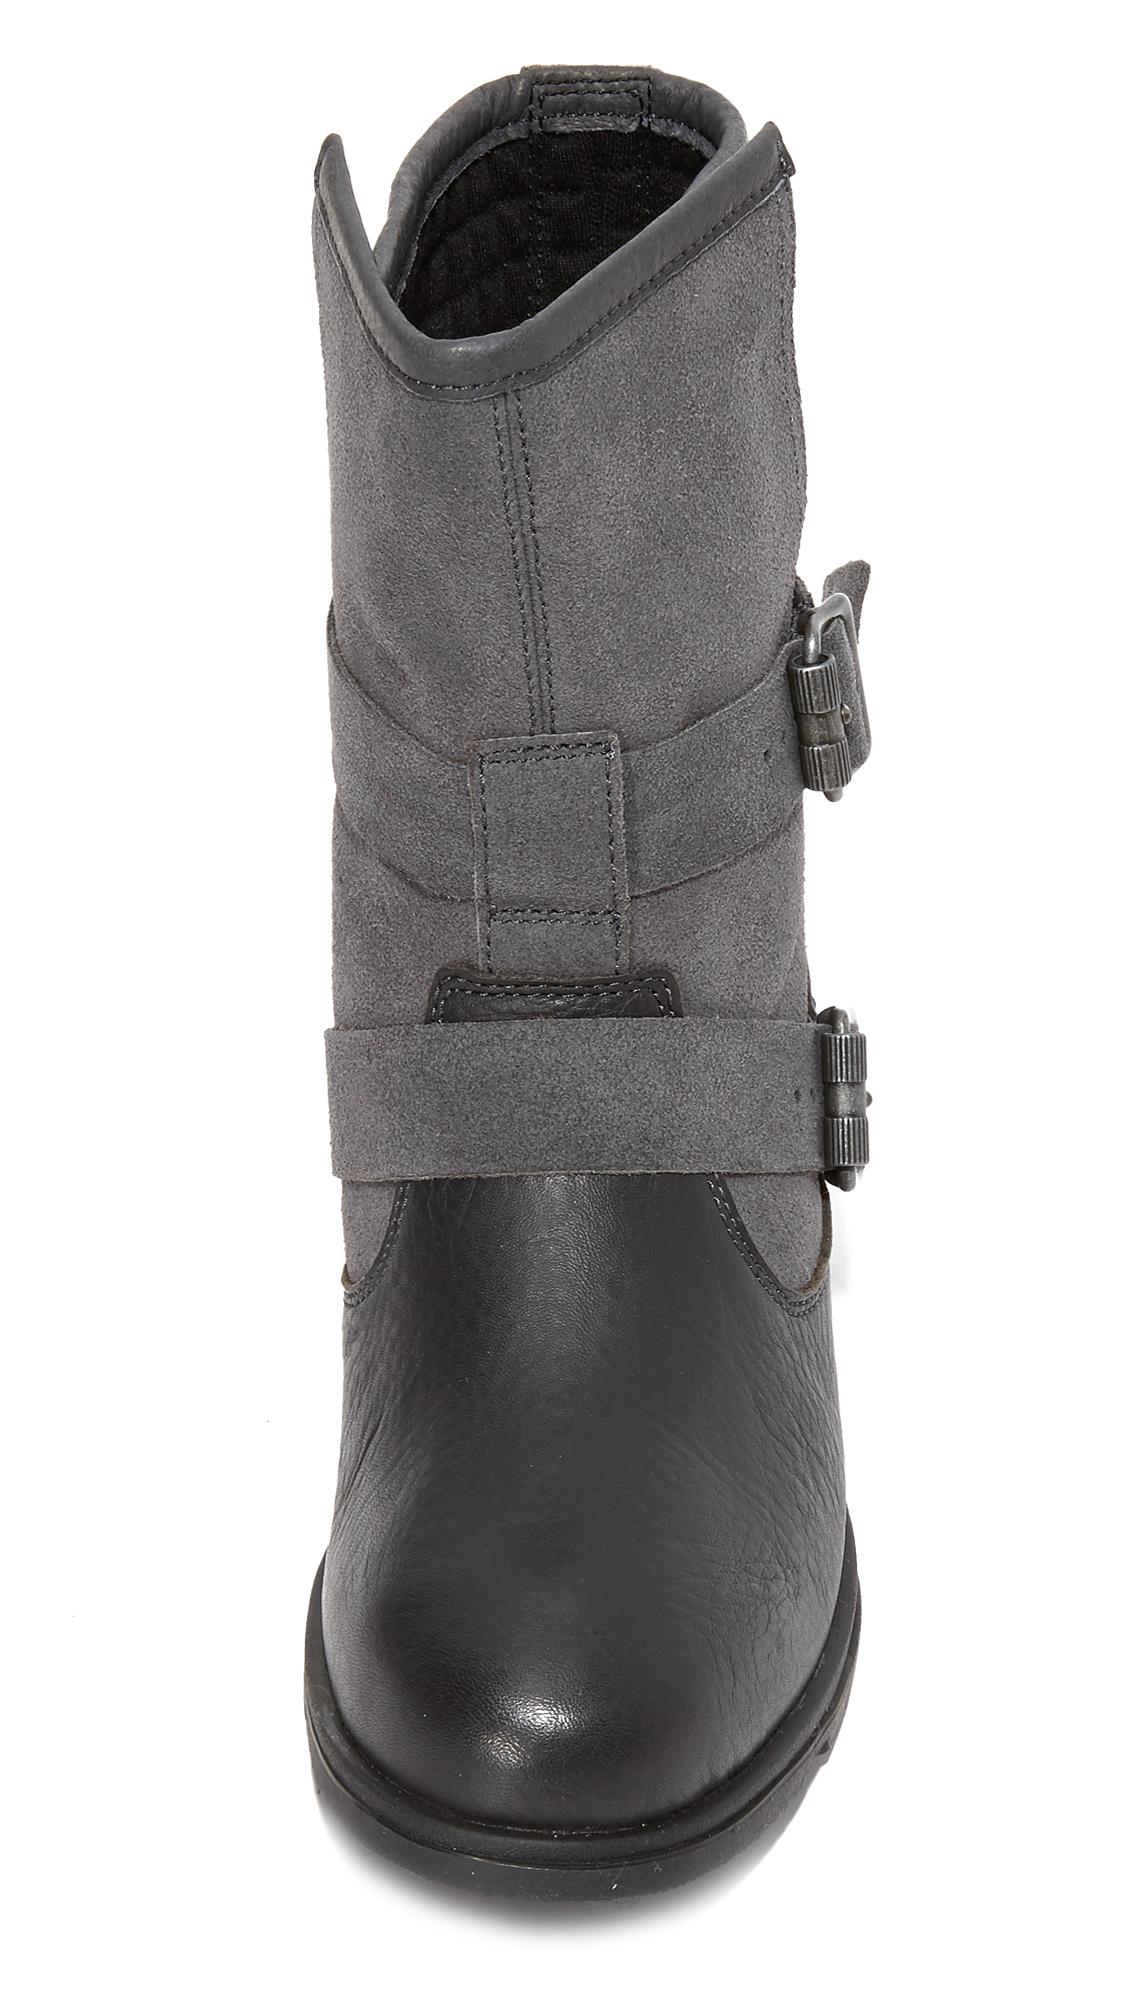 Sorel Leather Major Moto Boots in Dark Grey/Black (Gray